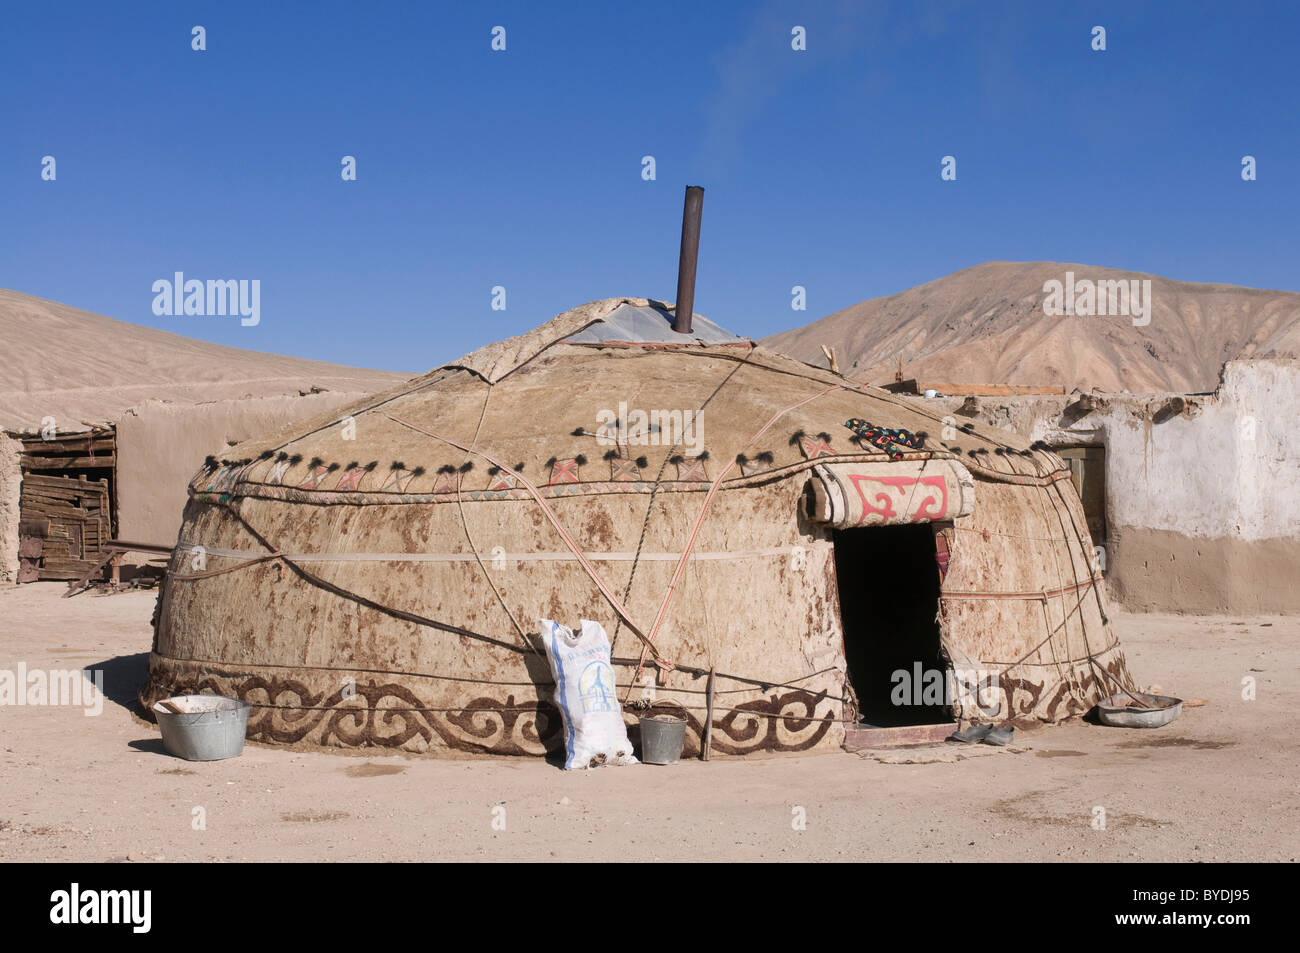 Lonely yurt in Bununkul, Pamir mountains, Tajikistan, Central Asia Stock Photo